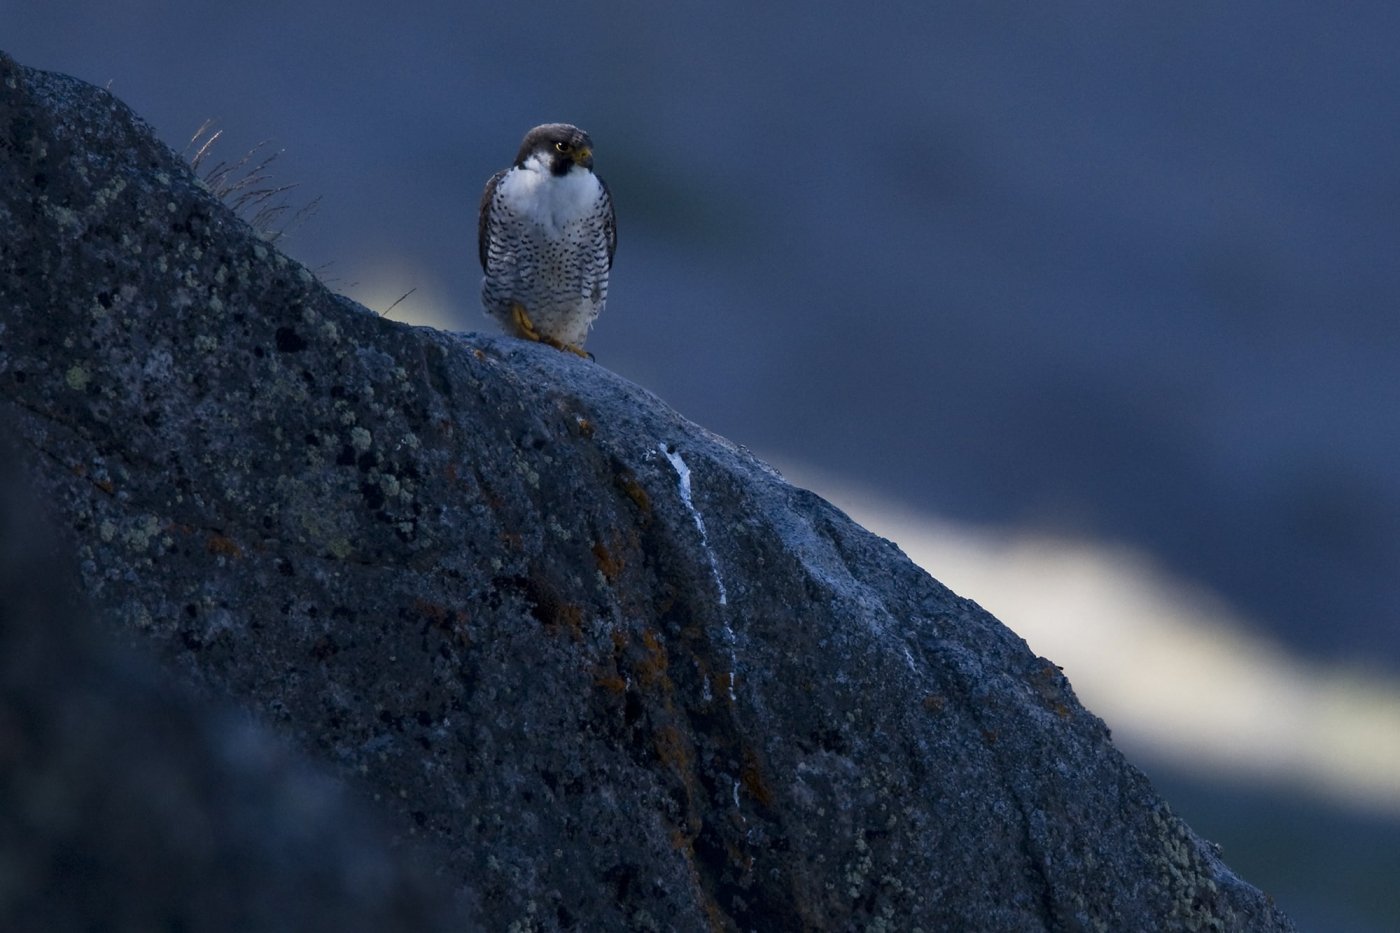 Peregrine Falcon -EN, Kiinnaaleeraq -KAL, Vandrefalk -DA, Falco peregrinus -LAT. Photo by Carsten Egevang - Visit Greenland